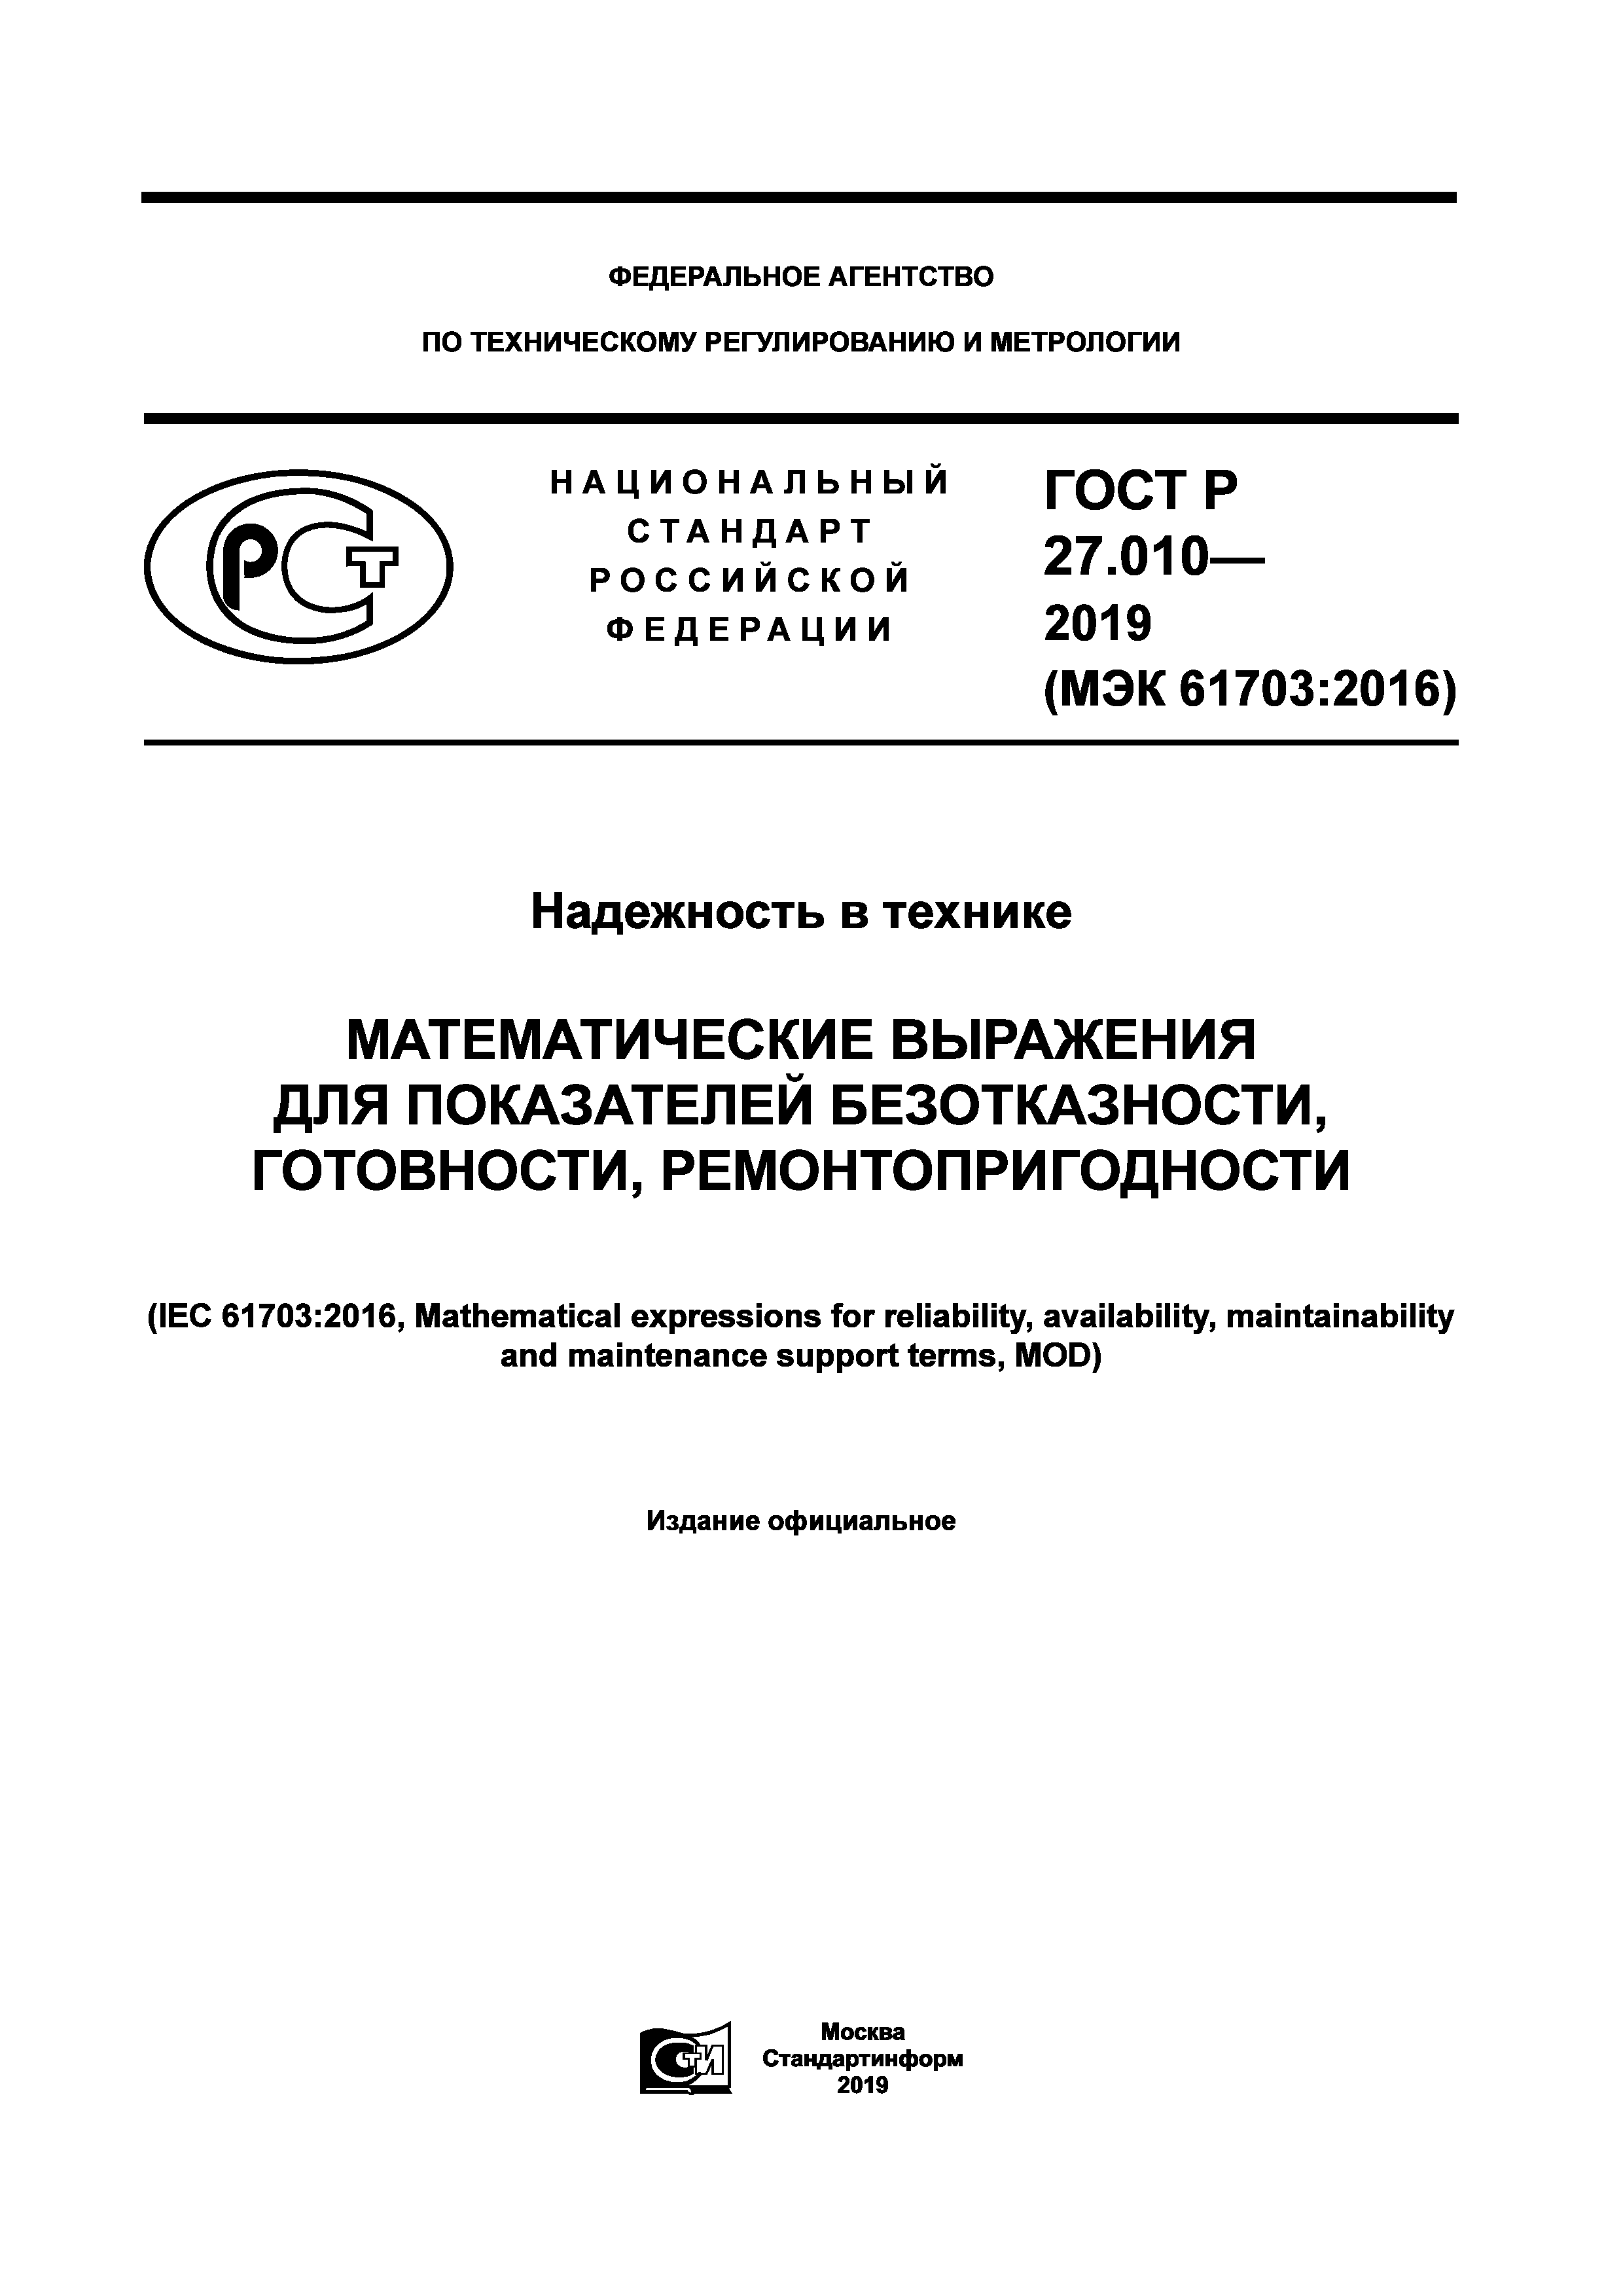 ГОСТ Р 27.010-2019